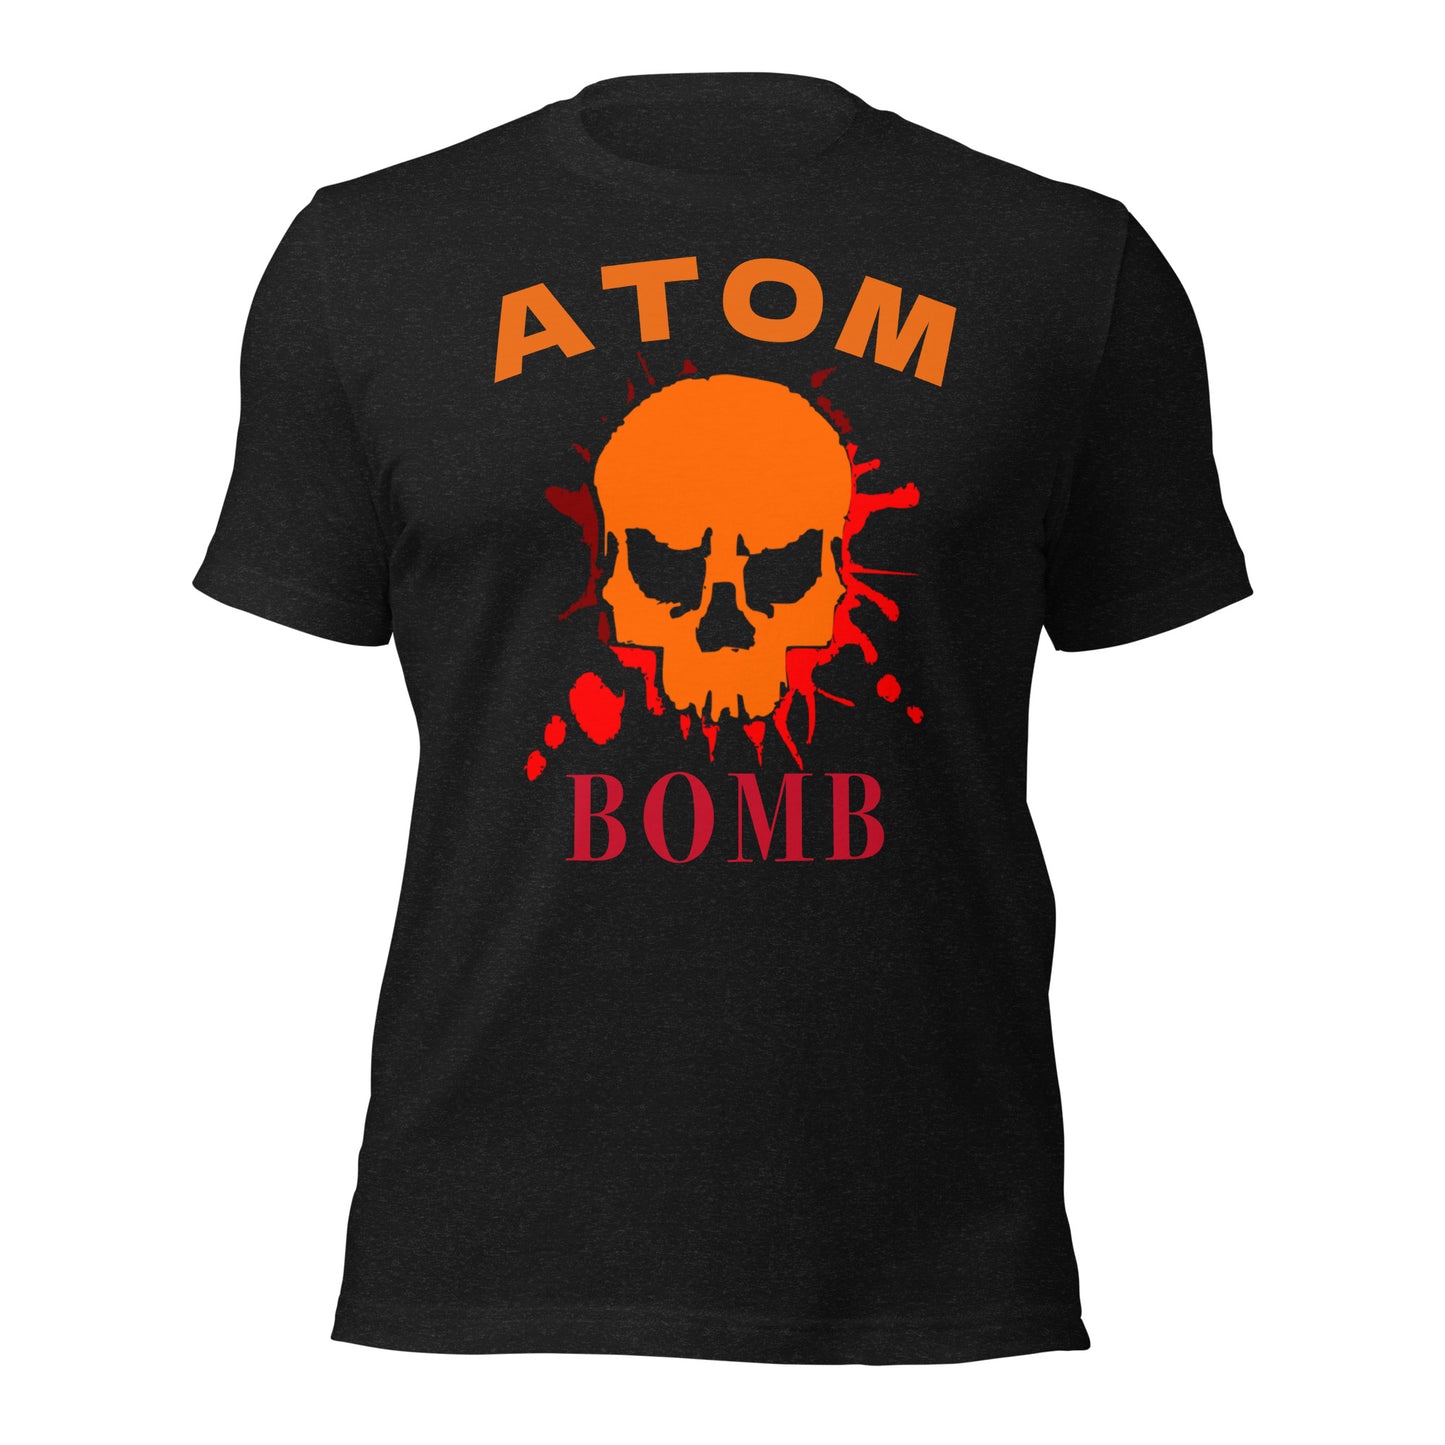 Anarchy Wear "Atom Bomb" By Atom Unisex t-shirt